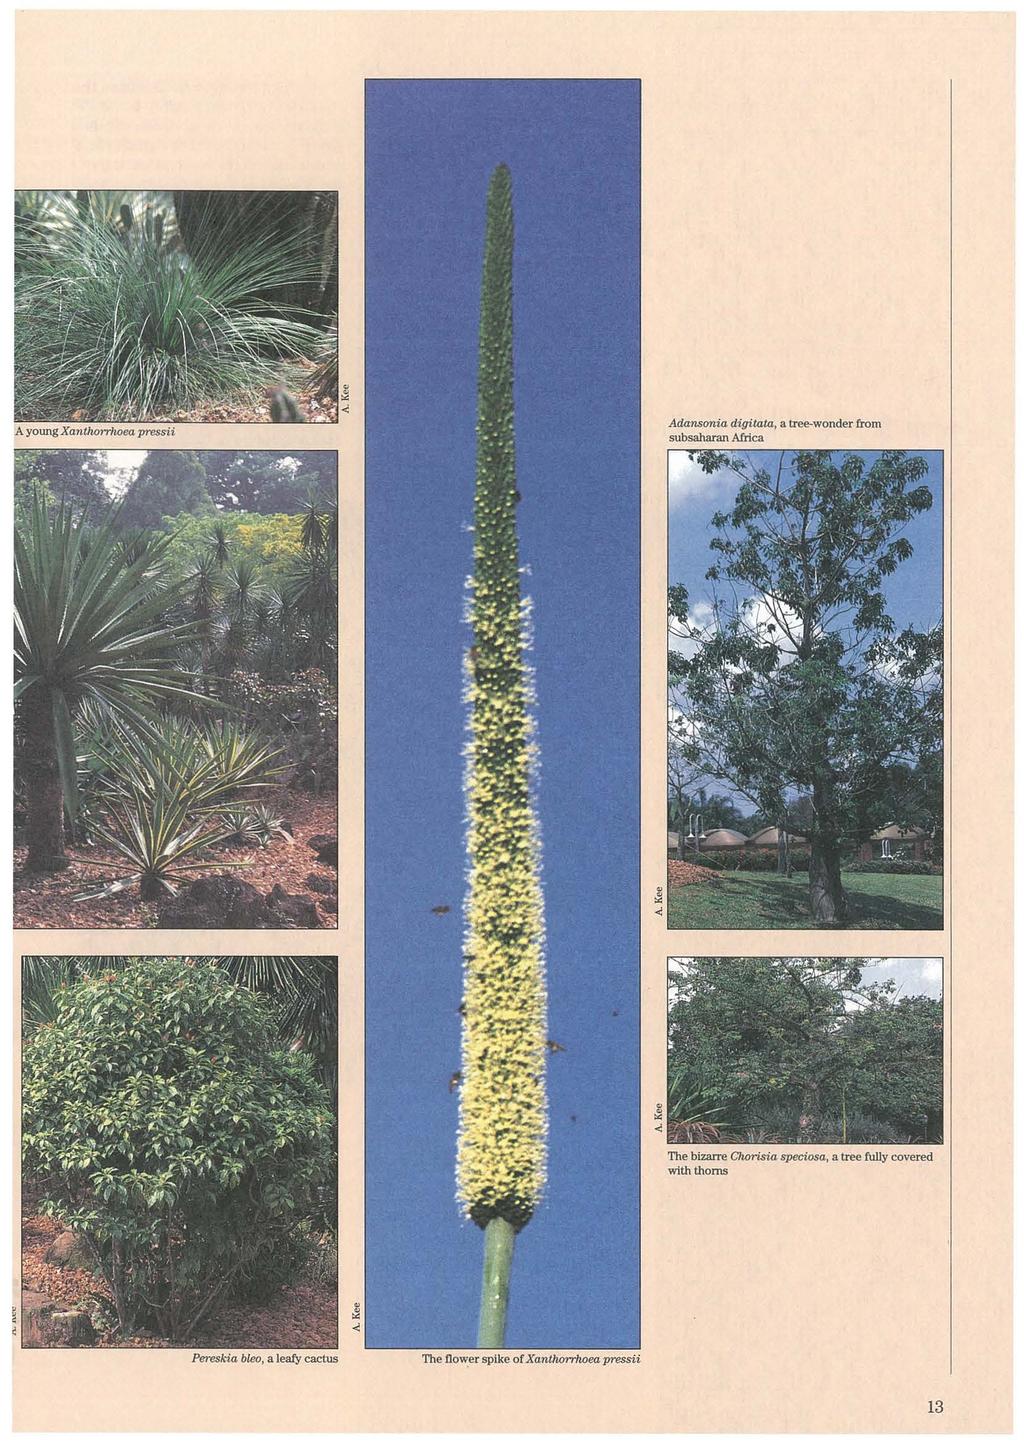 A young Xantlwrrlwea press-ii Adansonia digitata, a tree-wonder from subsaharan Africa The bizarre Clwris-ia